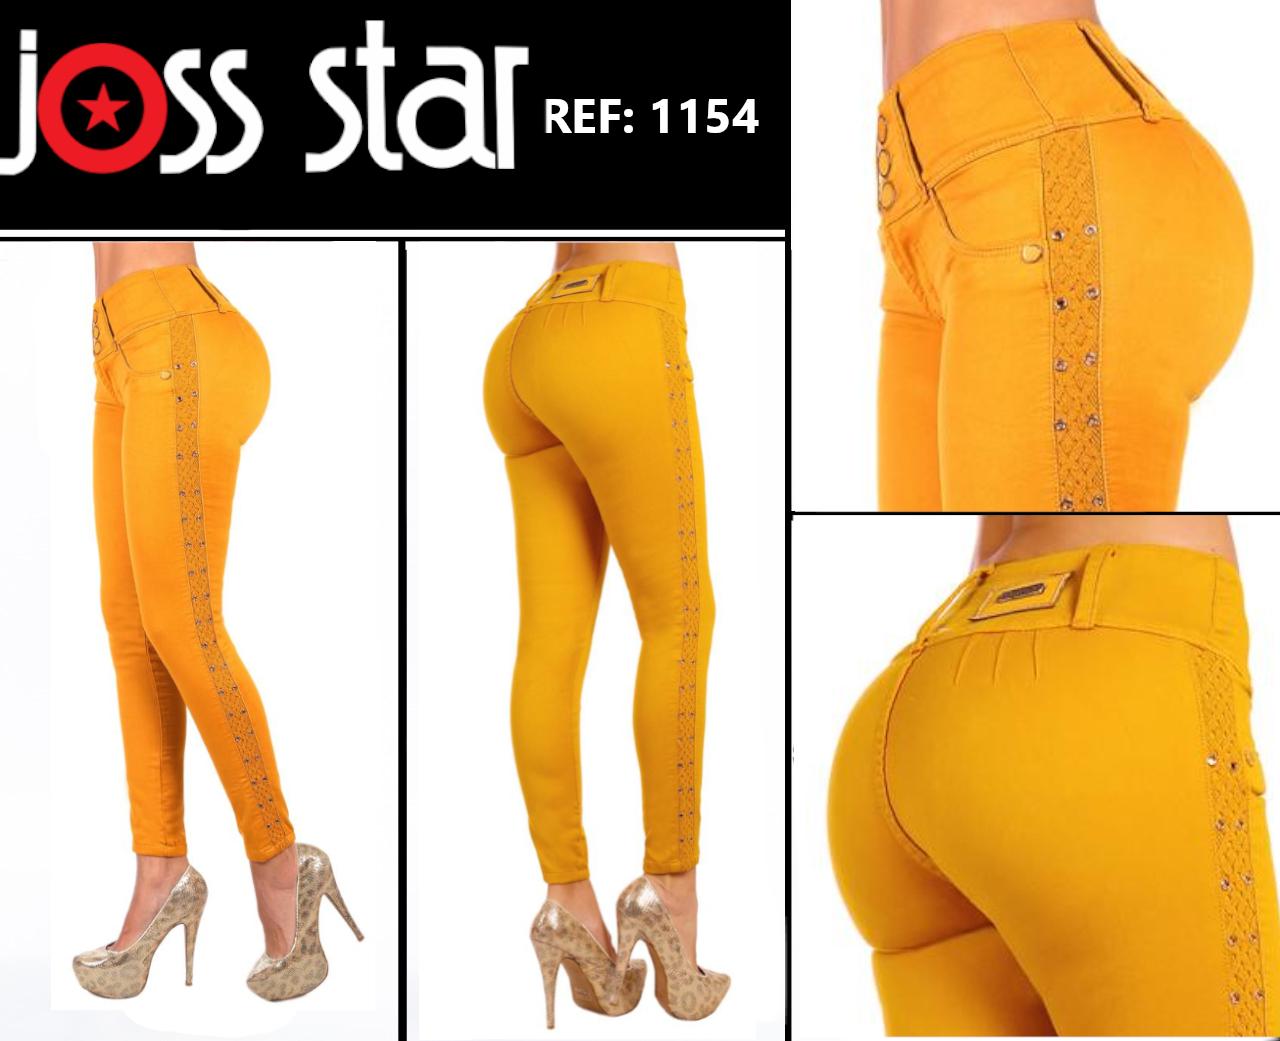 Jean Fashionable Boutique Colombian Levanta Cola Color Mustard brand Joss Star